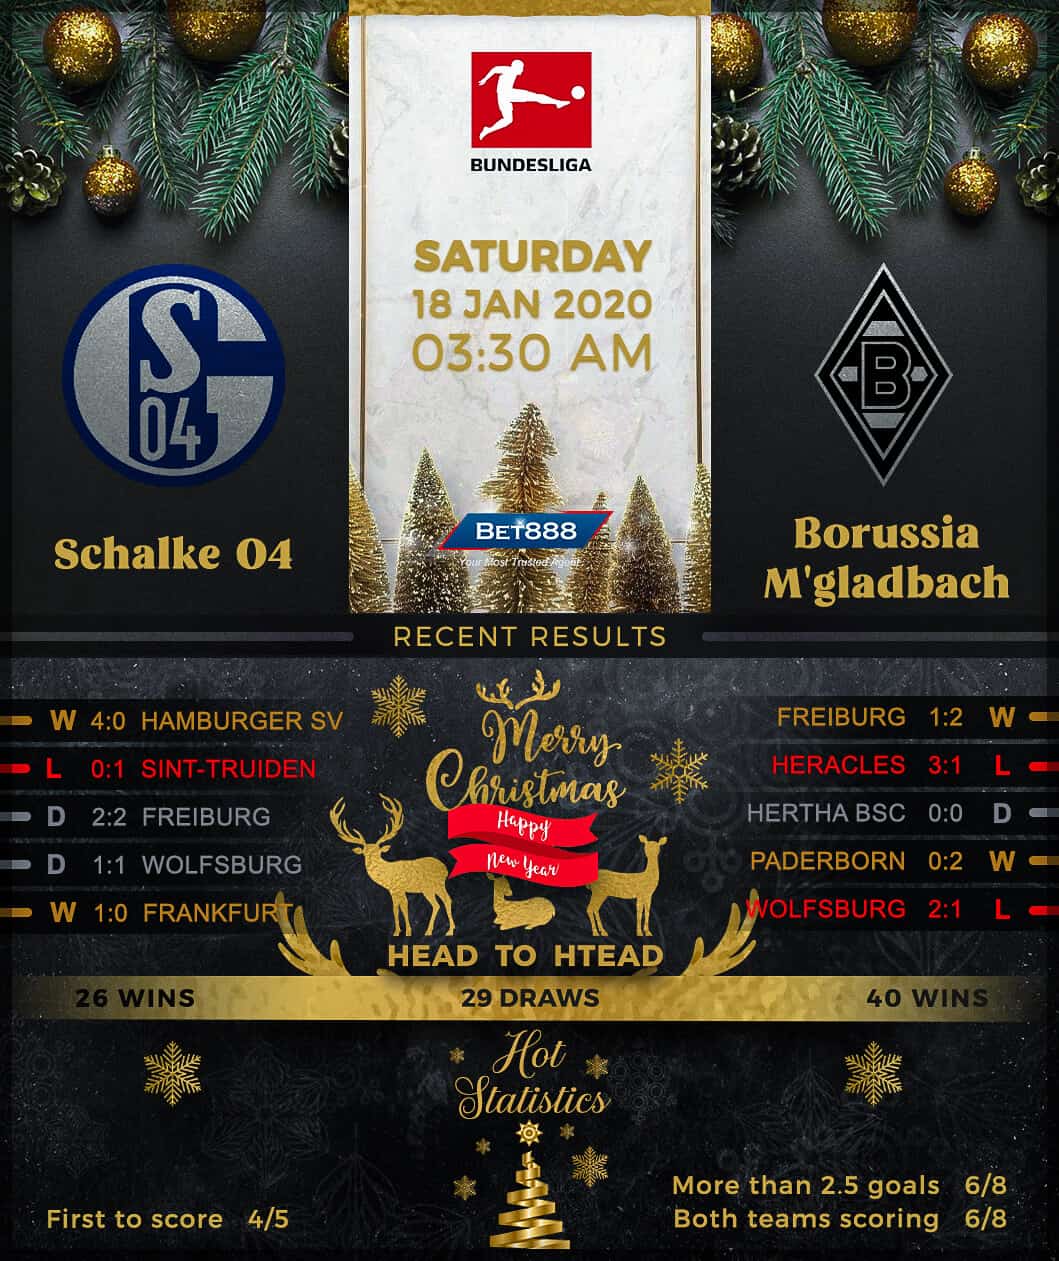 Schalke 04 vs Borussia Monchengladbach﻿ 18/01/20